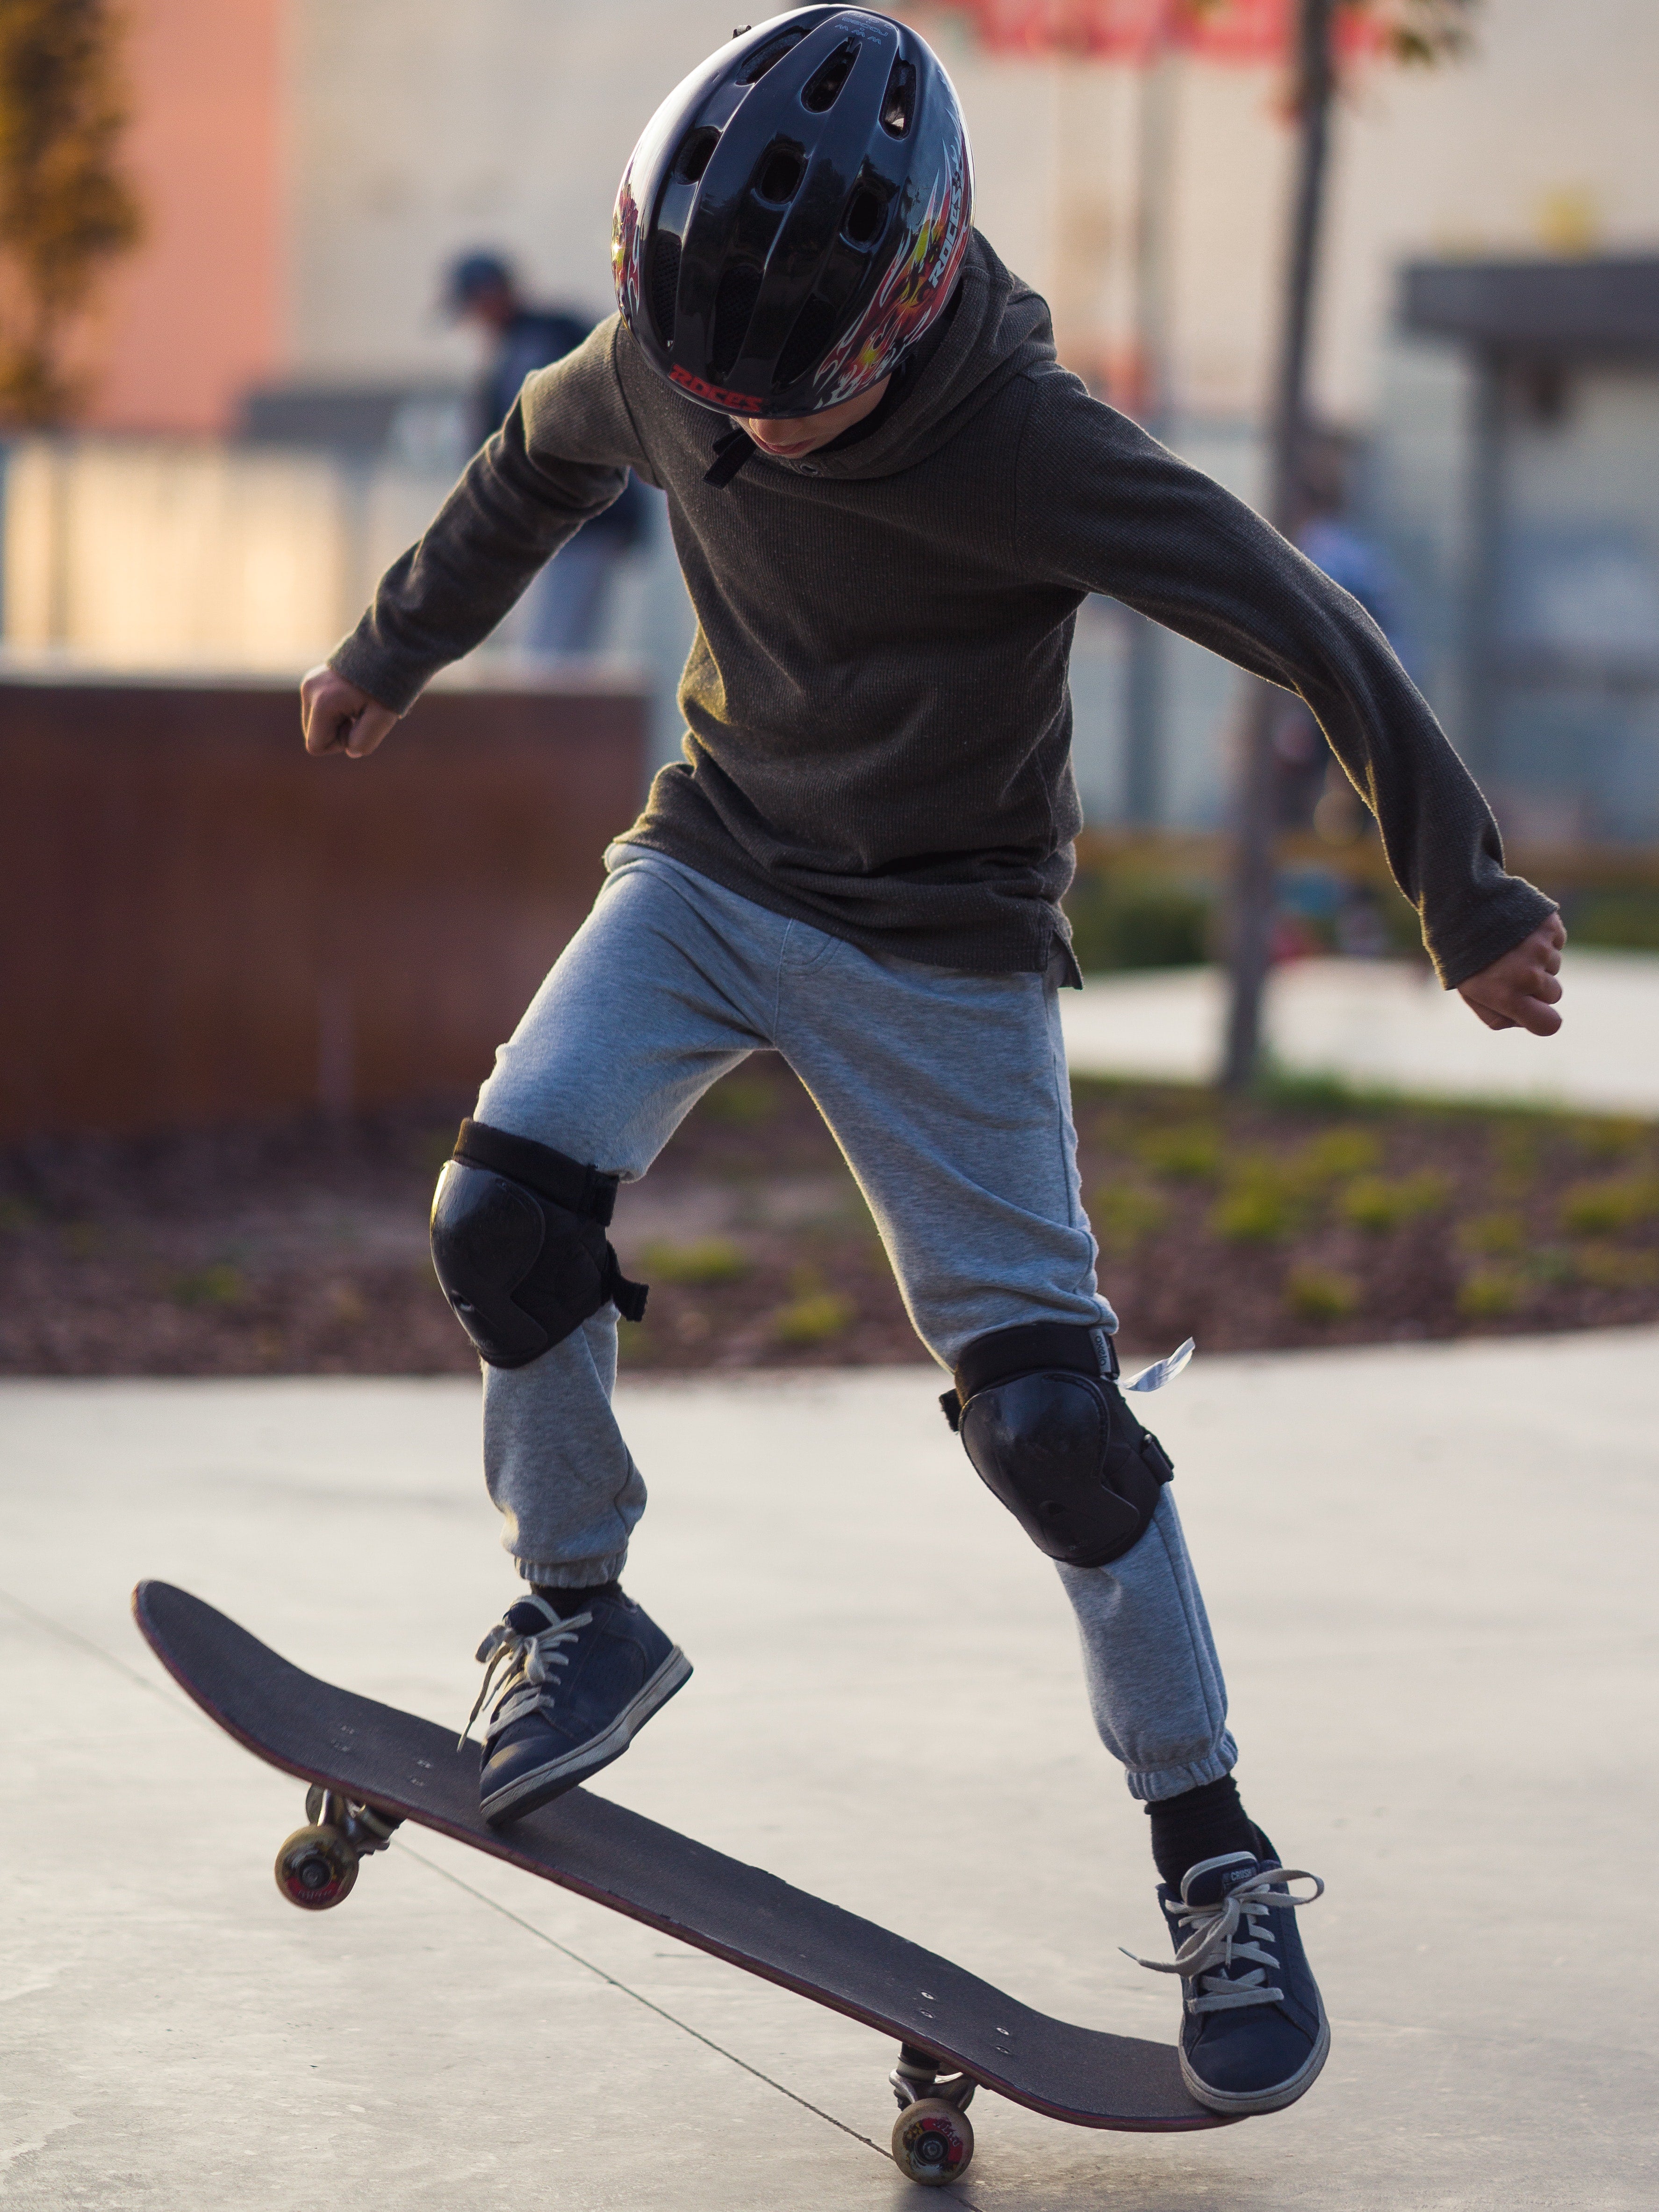 Buy JBM Kids Skate Knee Pads 6 Pieces Protective Gear Set Elbow